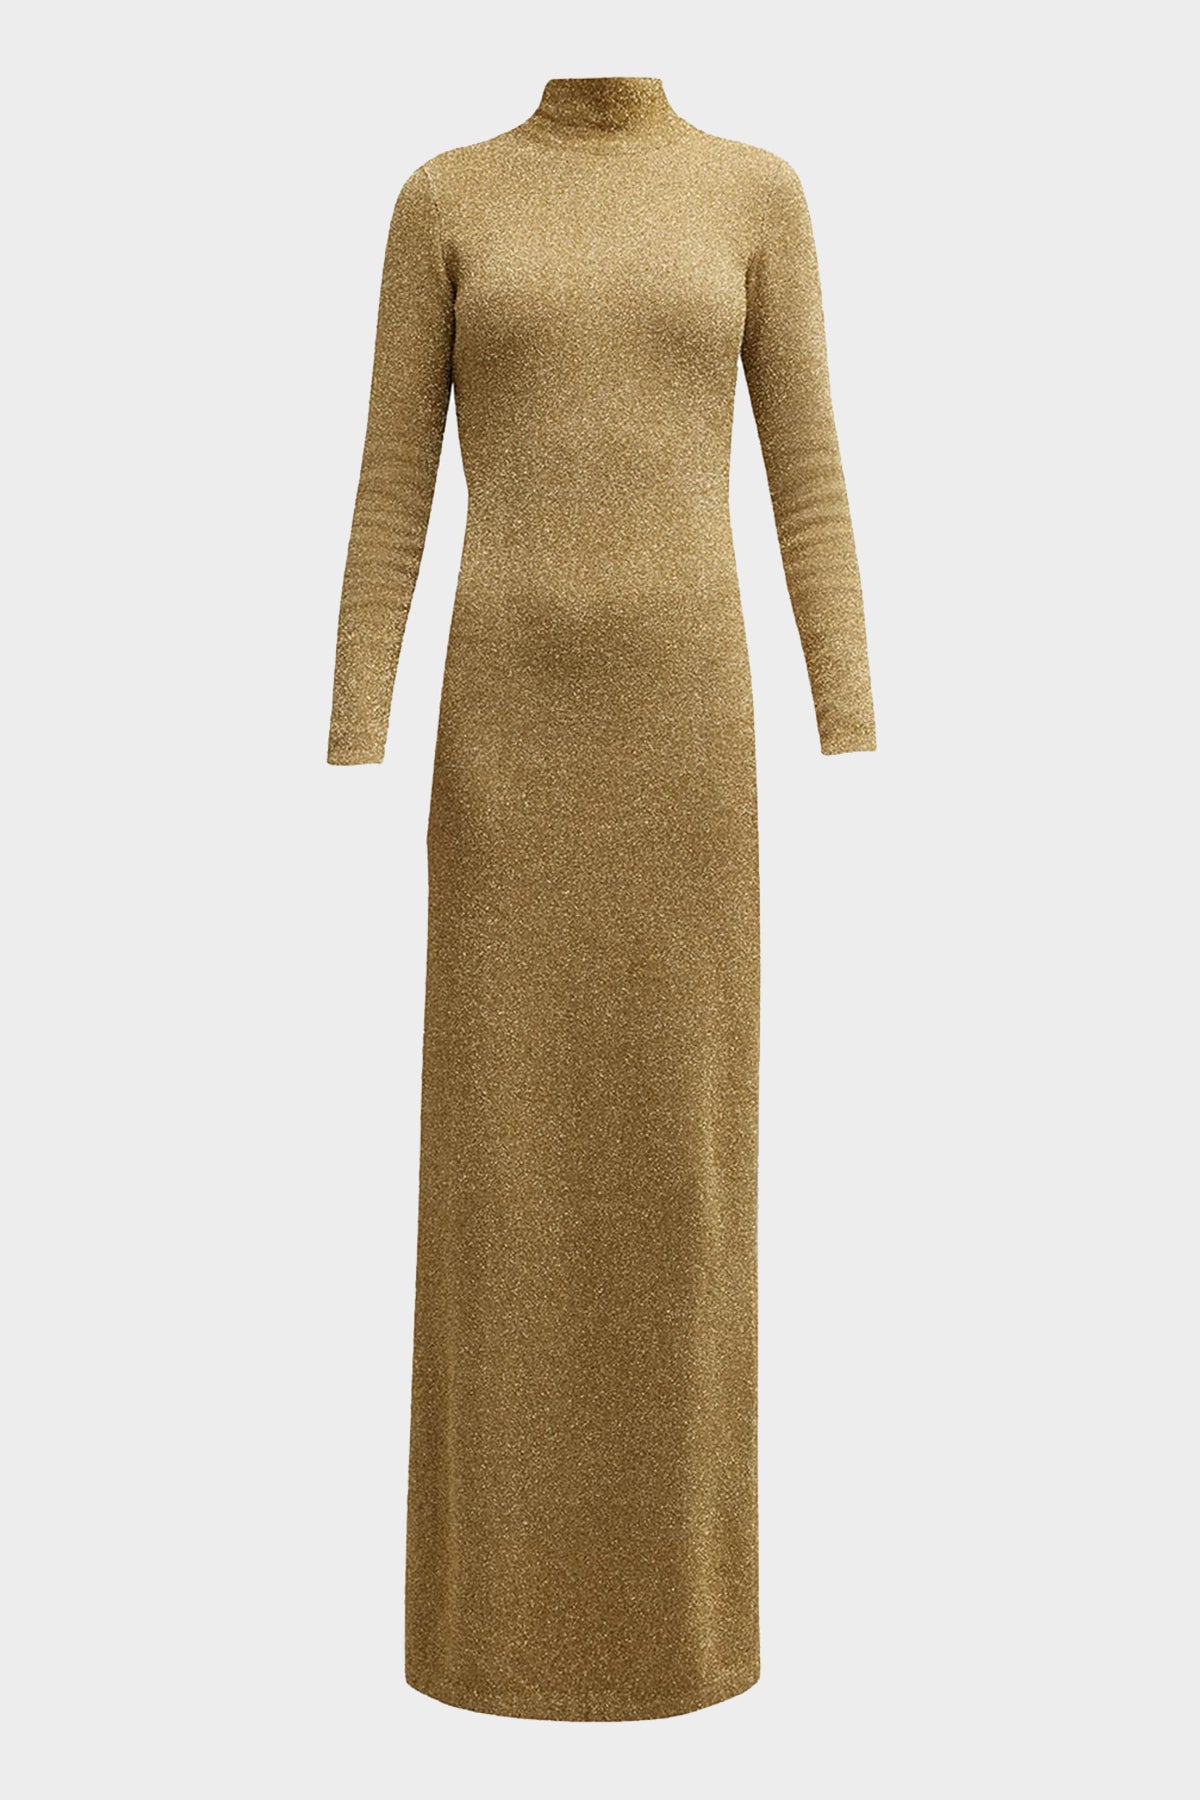 Metallic Knit Turtleneck Gown in Gold - shop-olivia.com